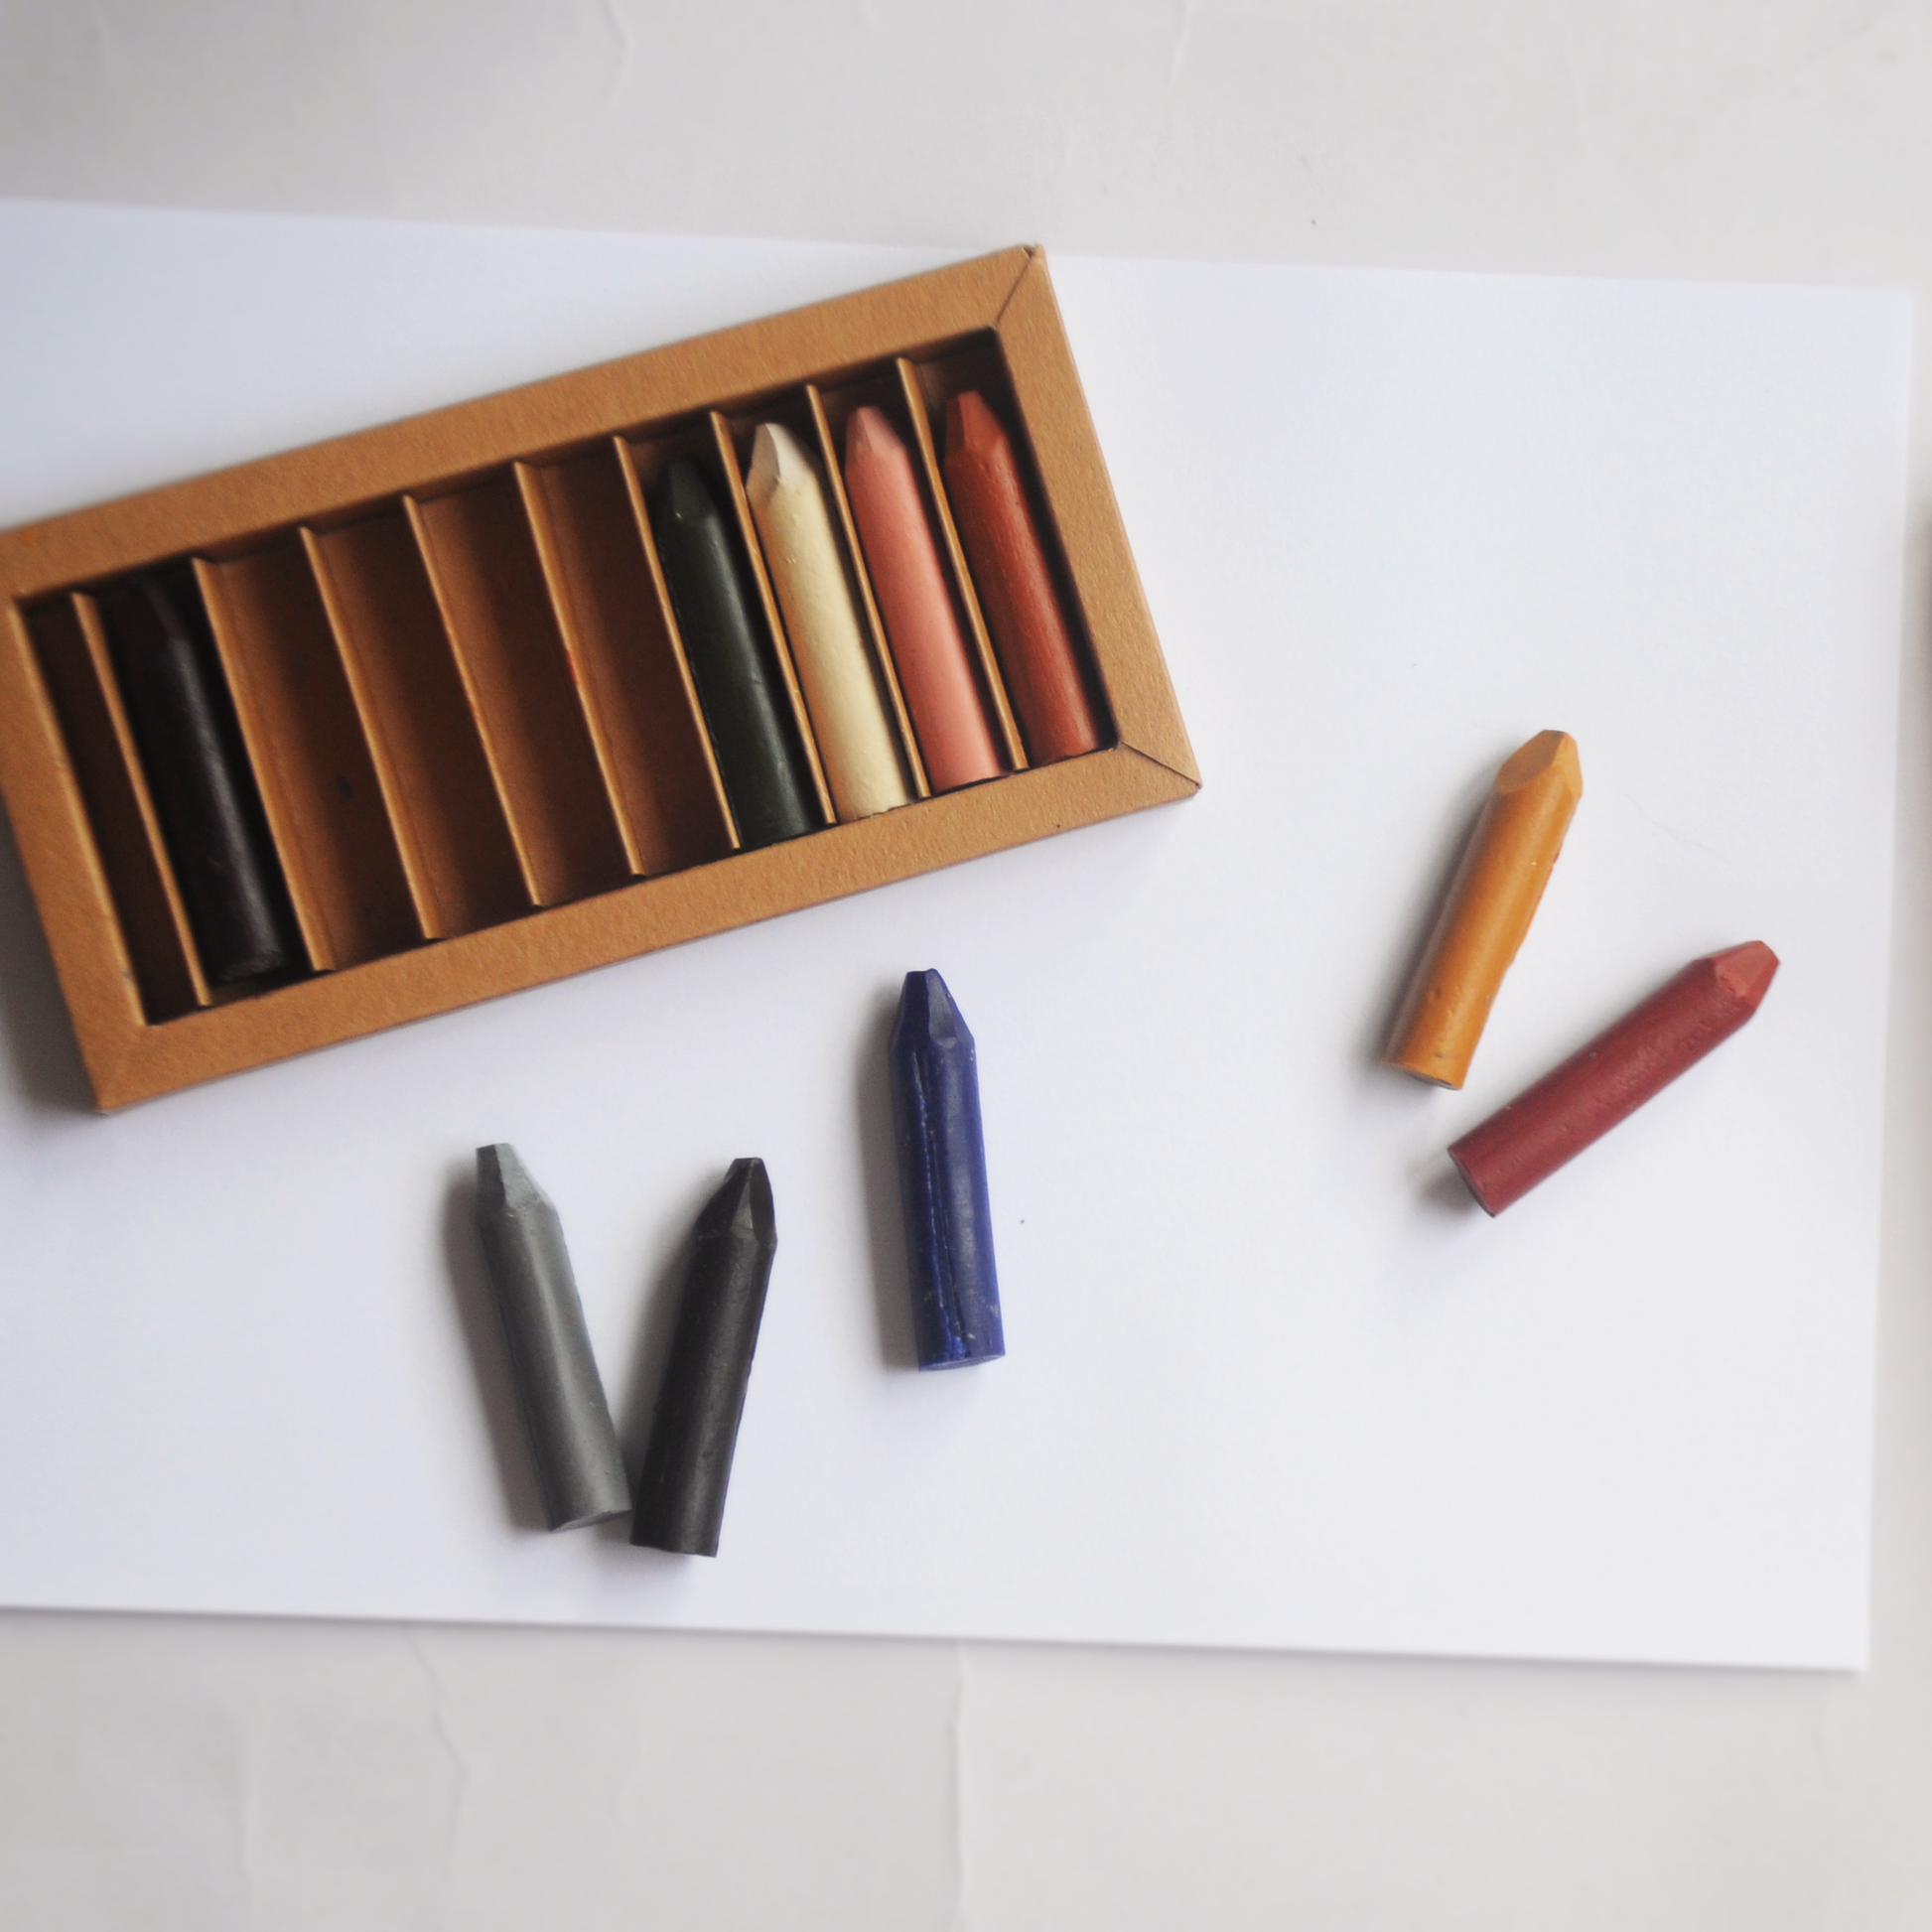 9-Piece All Natural & Handmade Organic Beeswax Drawing Crayons – Smilogy  Organic Beeswax Crayons